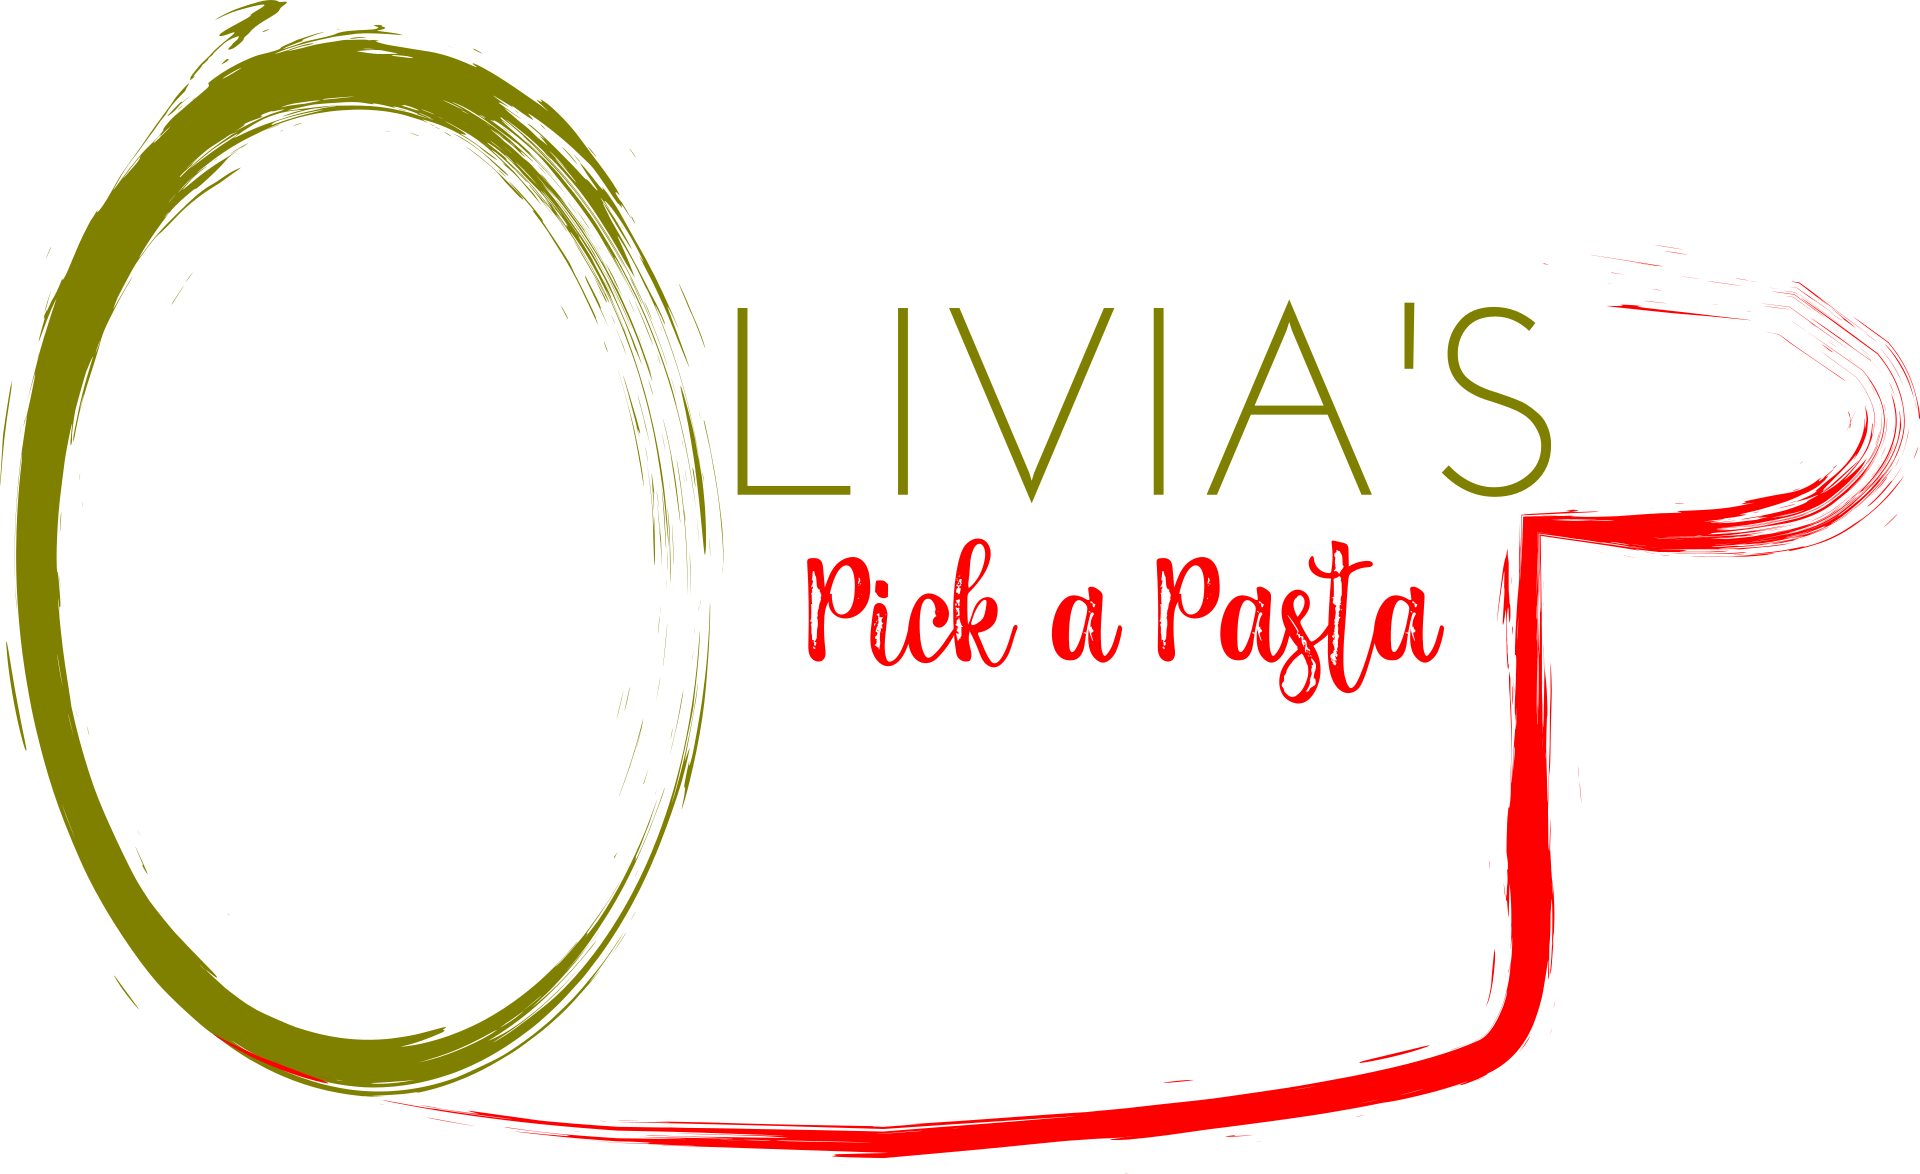 Olivia's Pick a Pasta logo